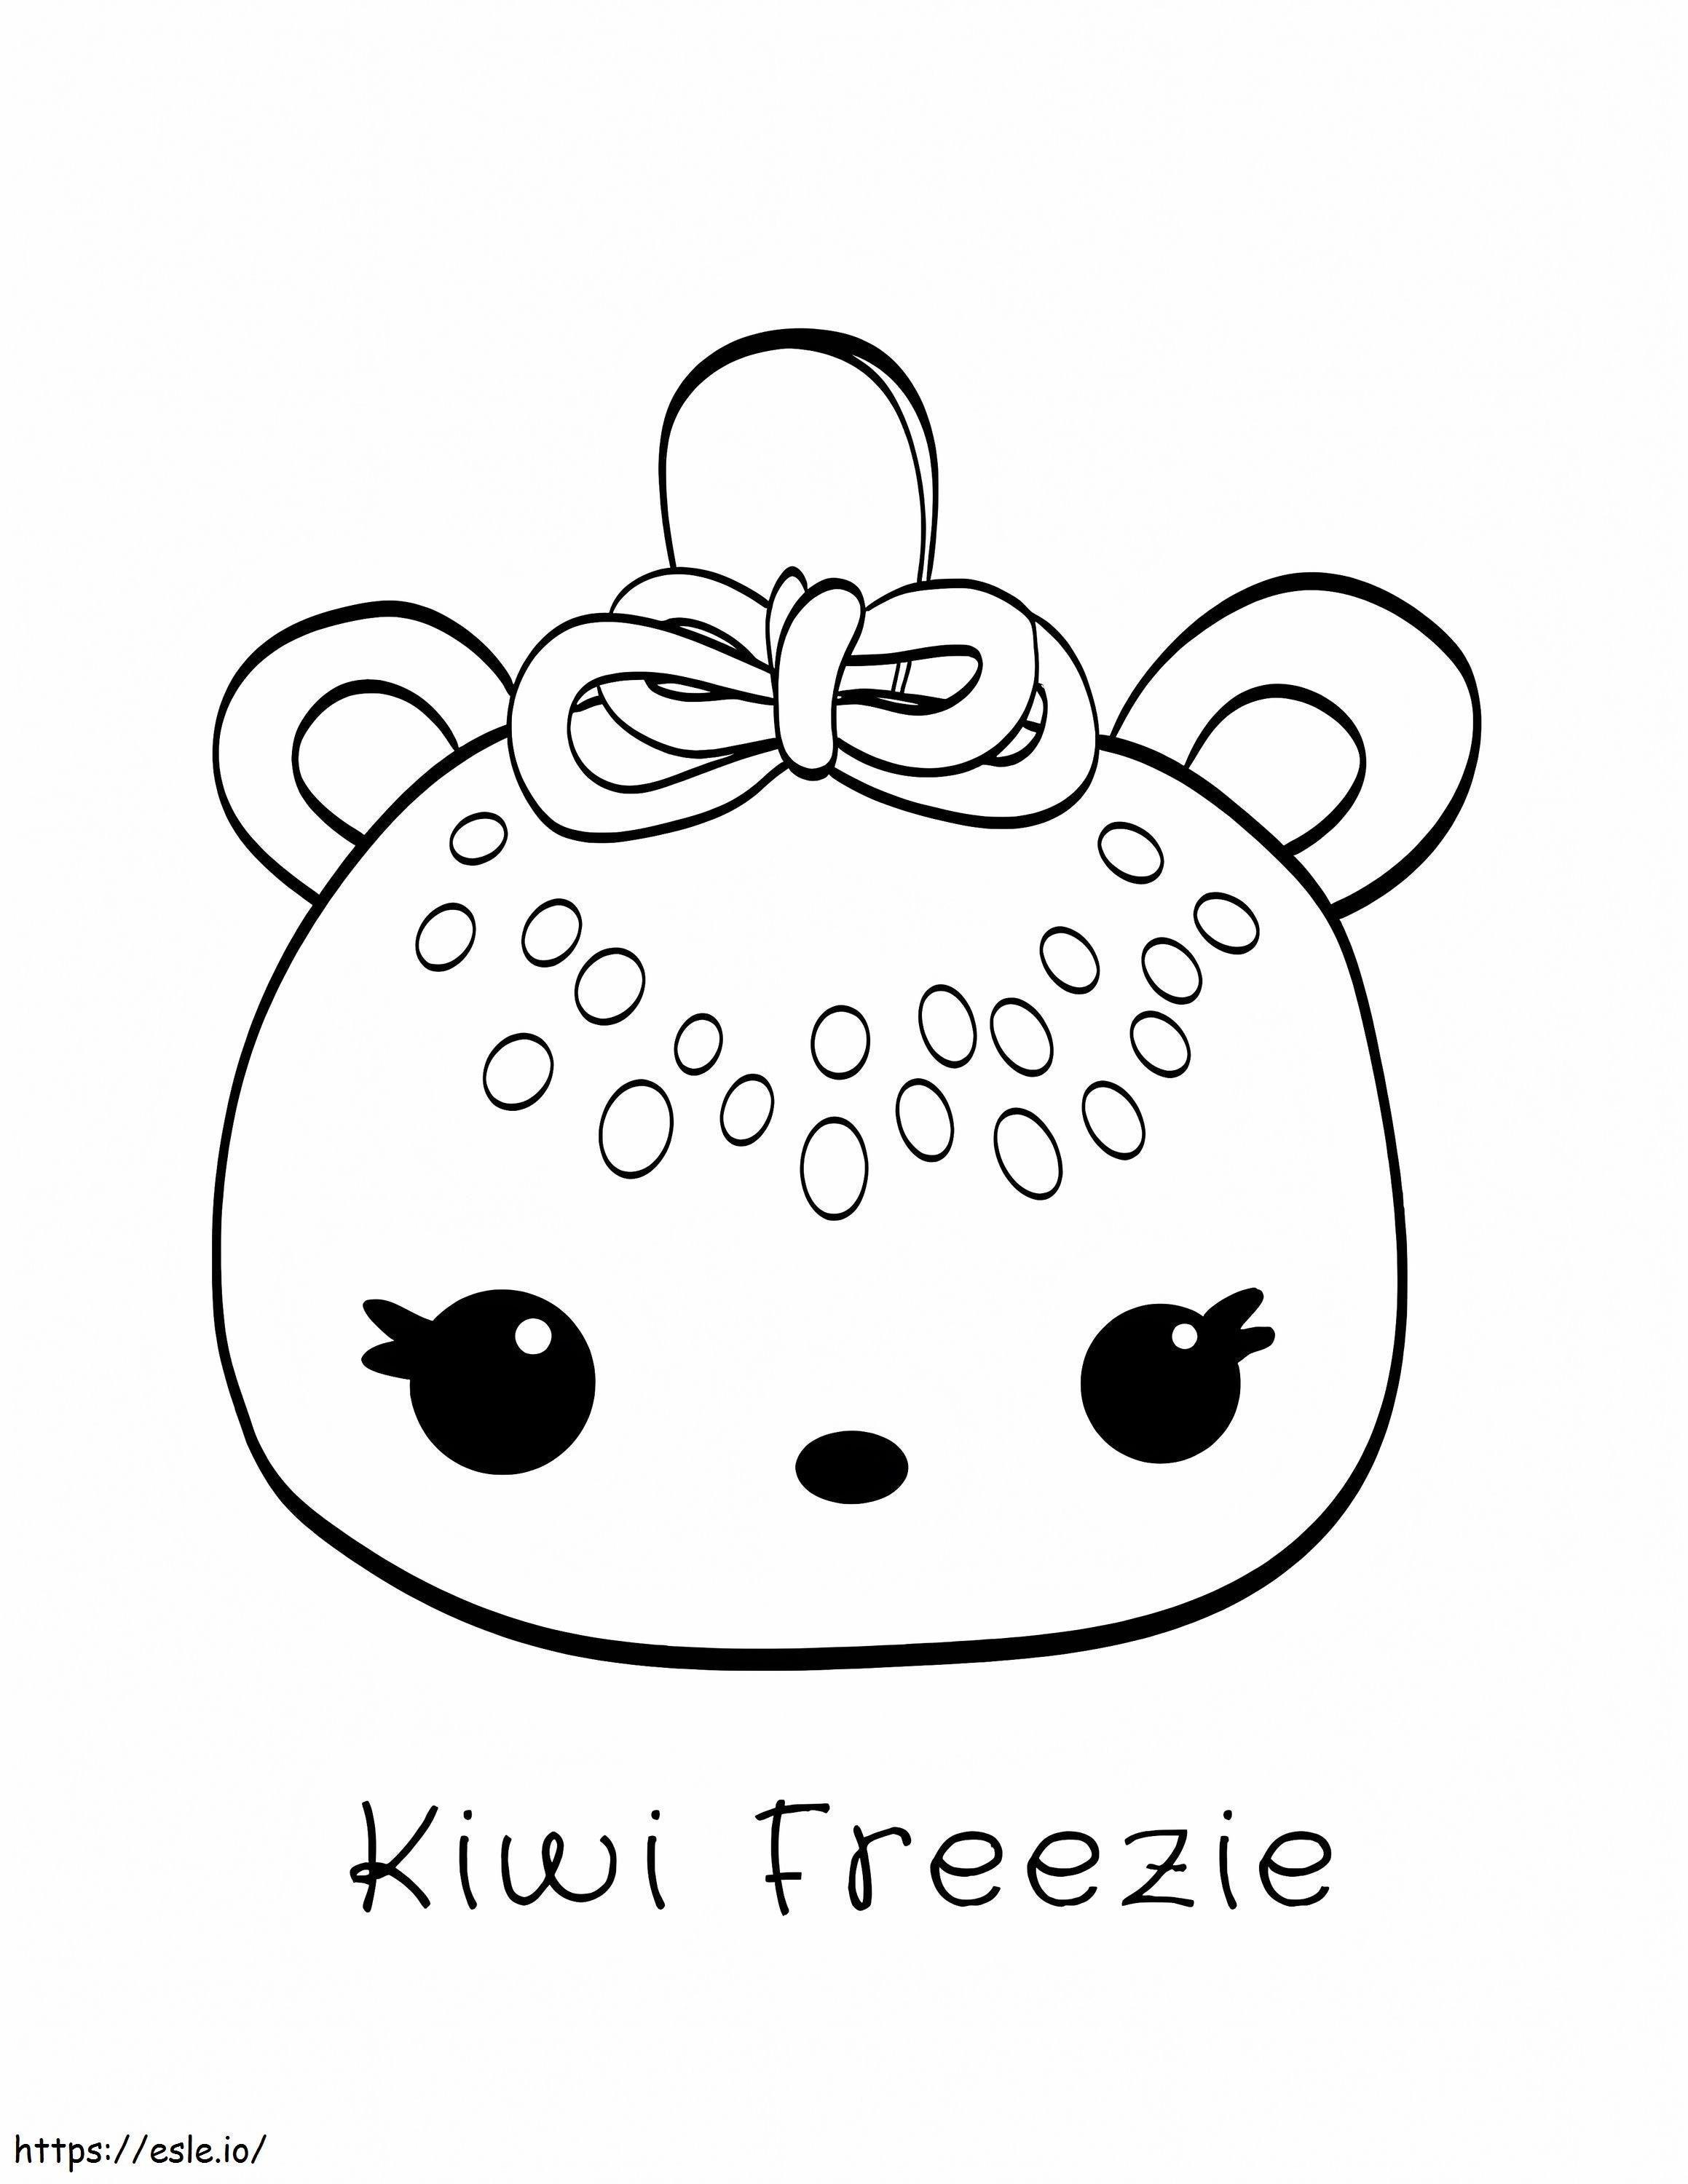 Kiwi Freezie coloring page